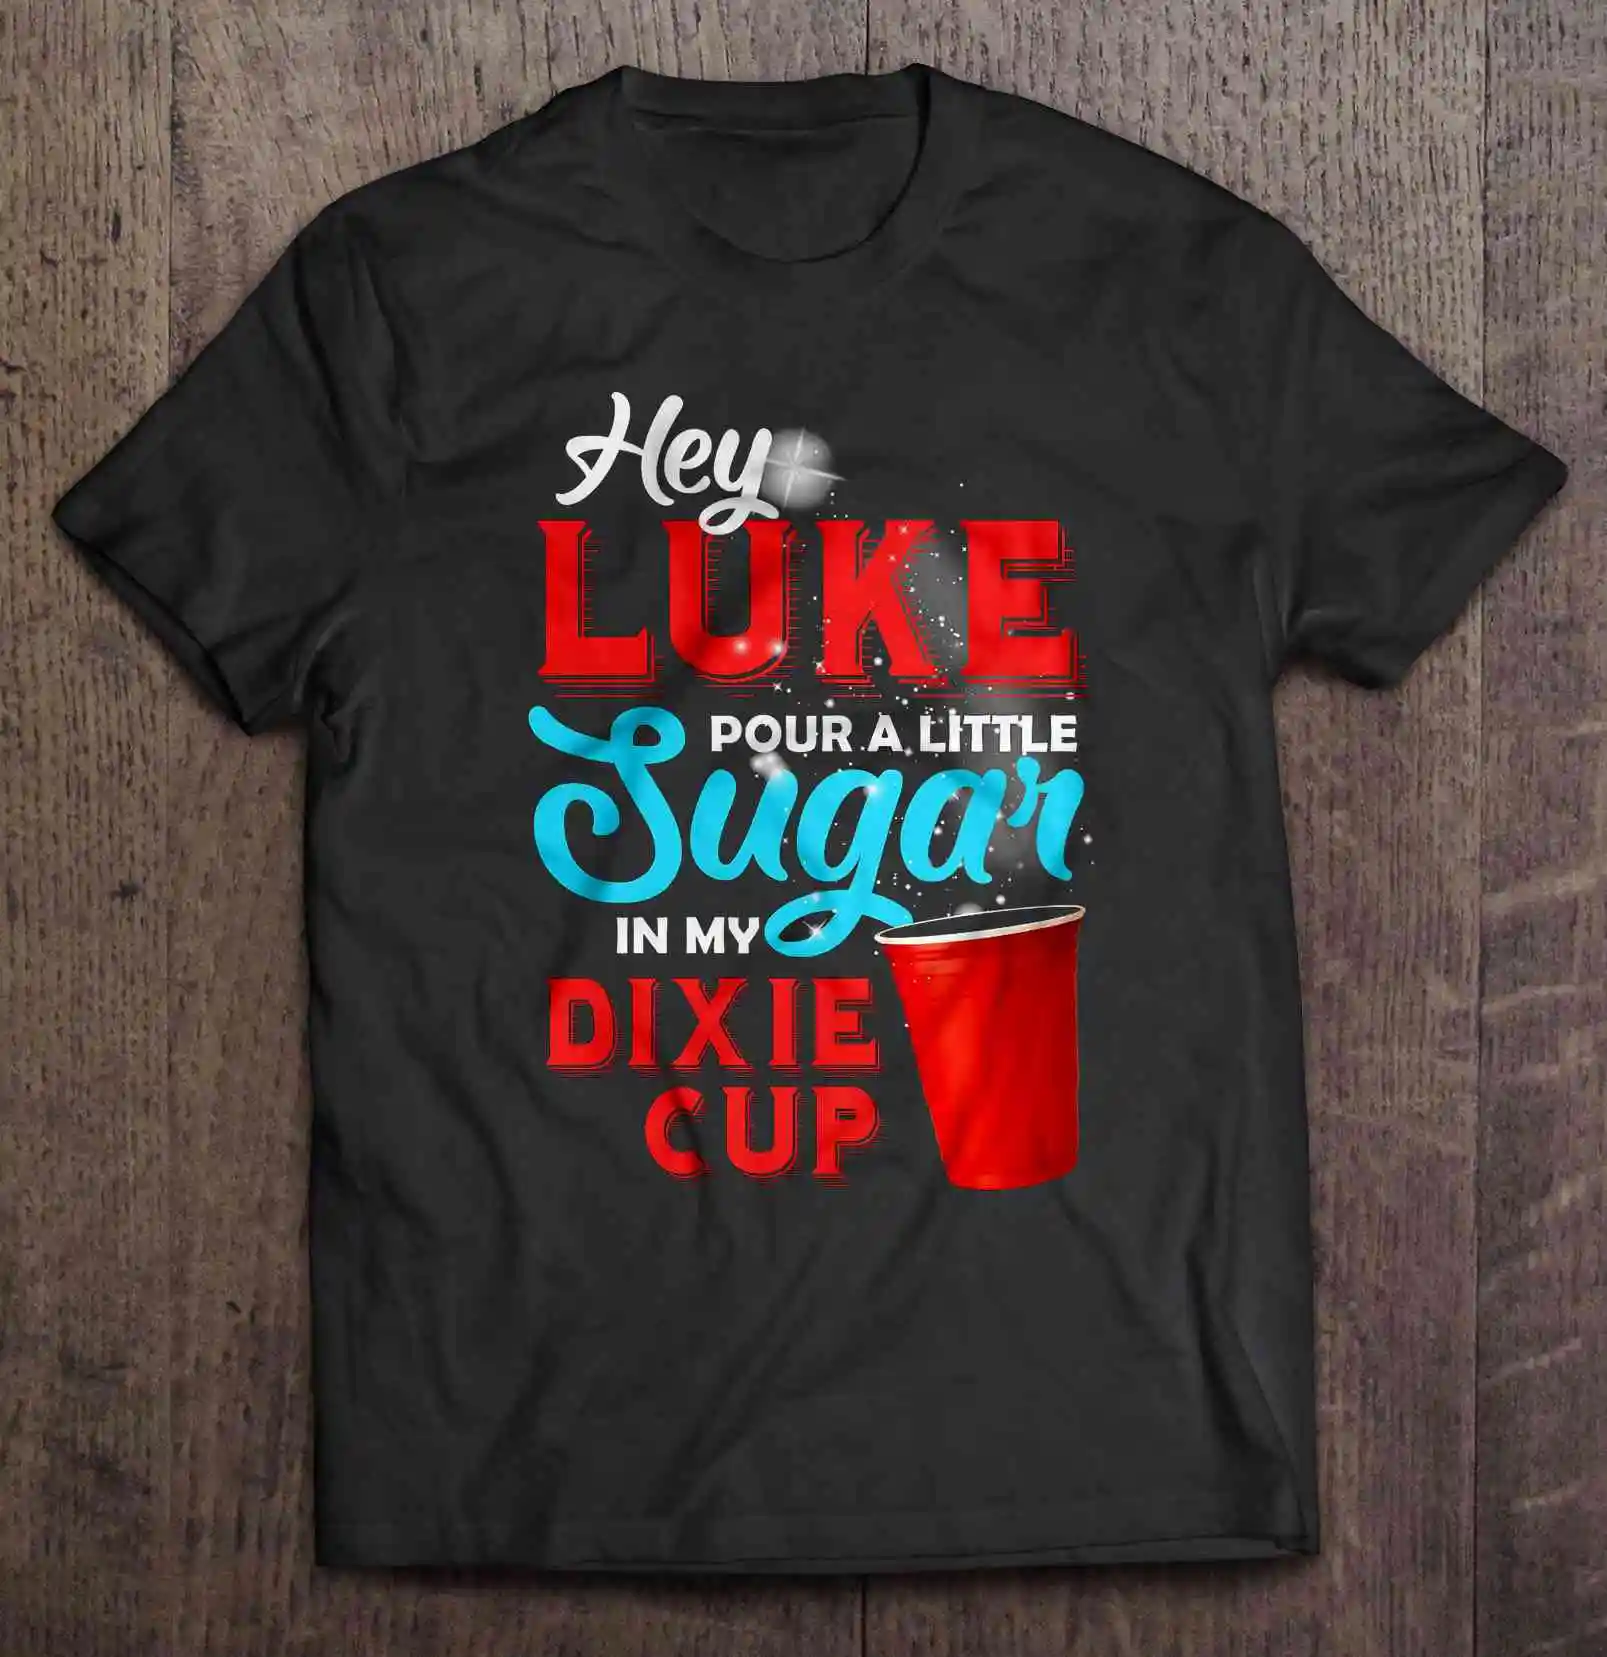 Hey Luke Pour A Little Sugar In My Dixie Cup Luke Bryan Tshirts|T-Shirts| -...